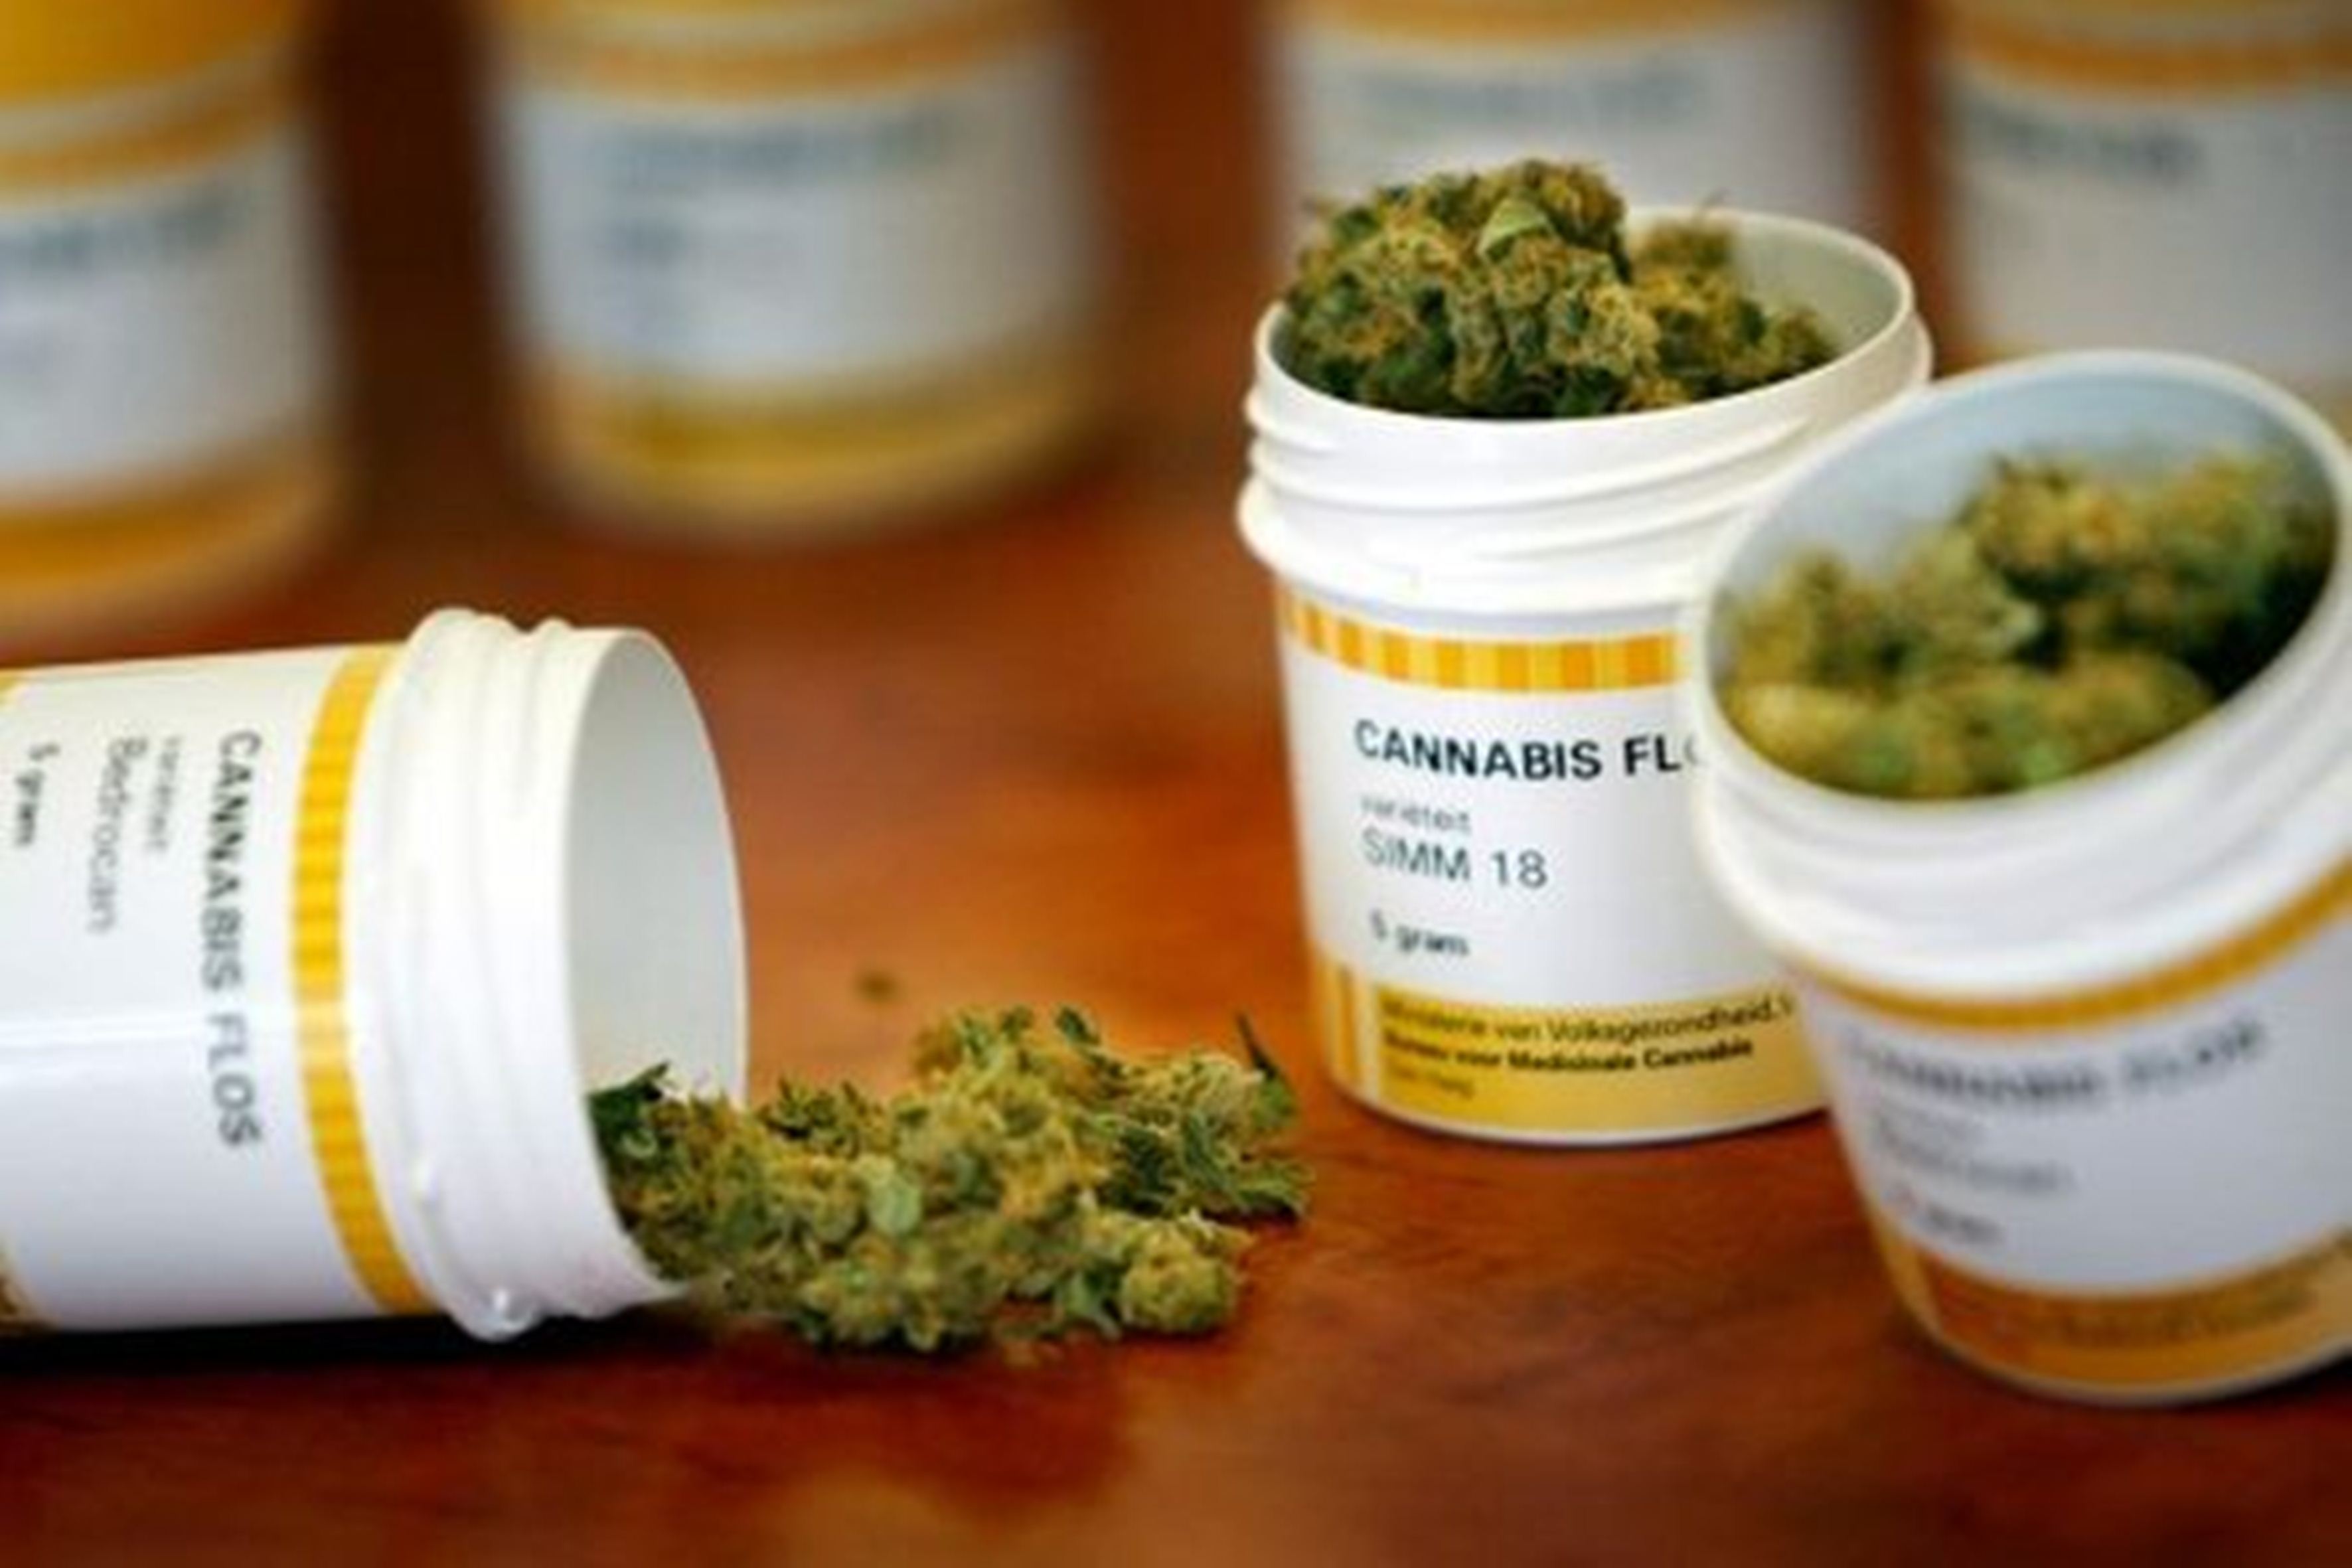  Médicos podrán recetar marihuana como medicamento controlado